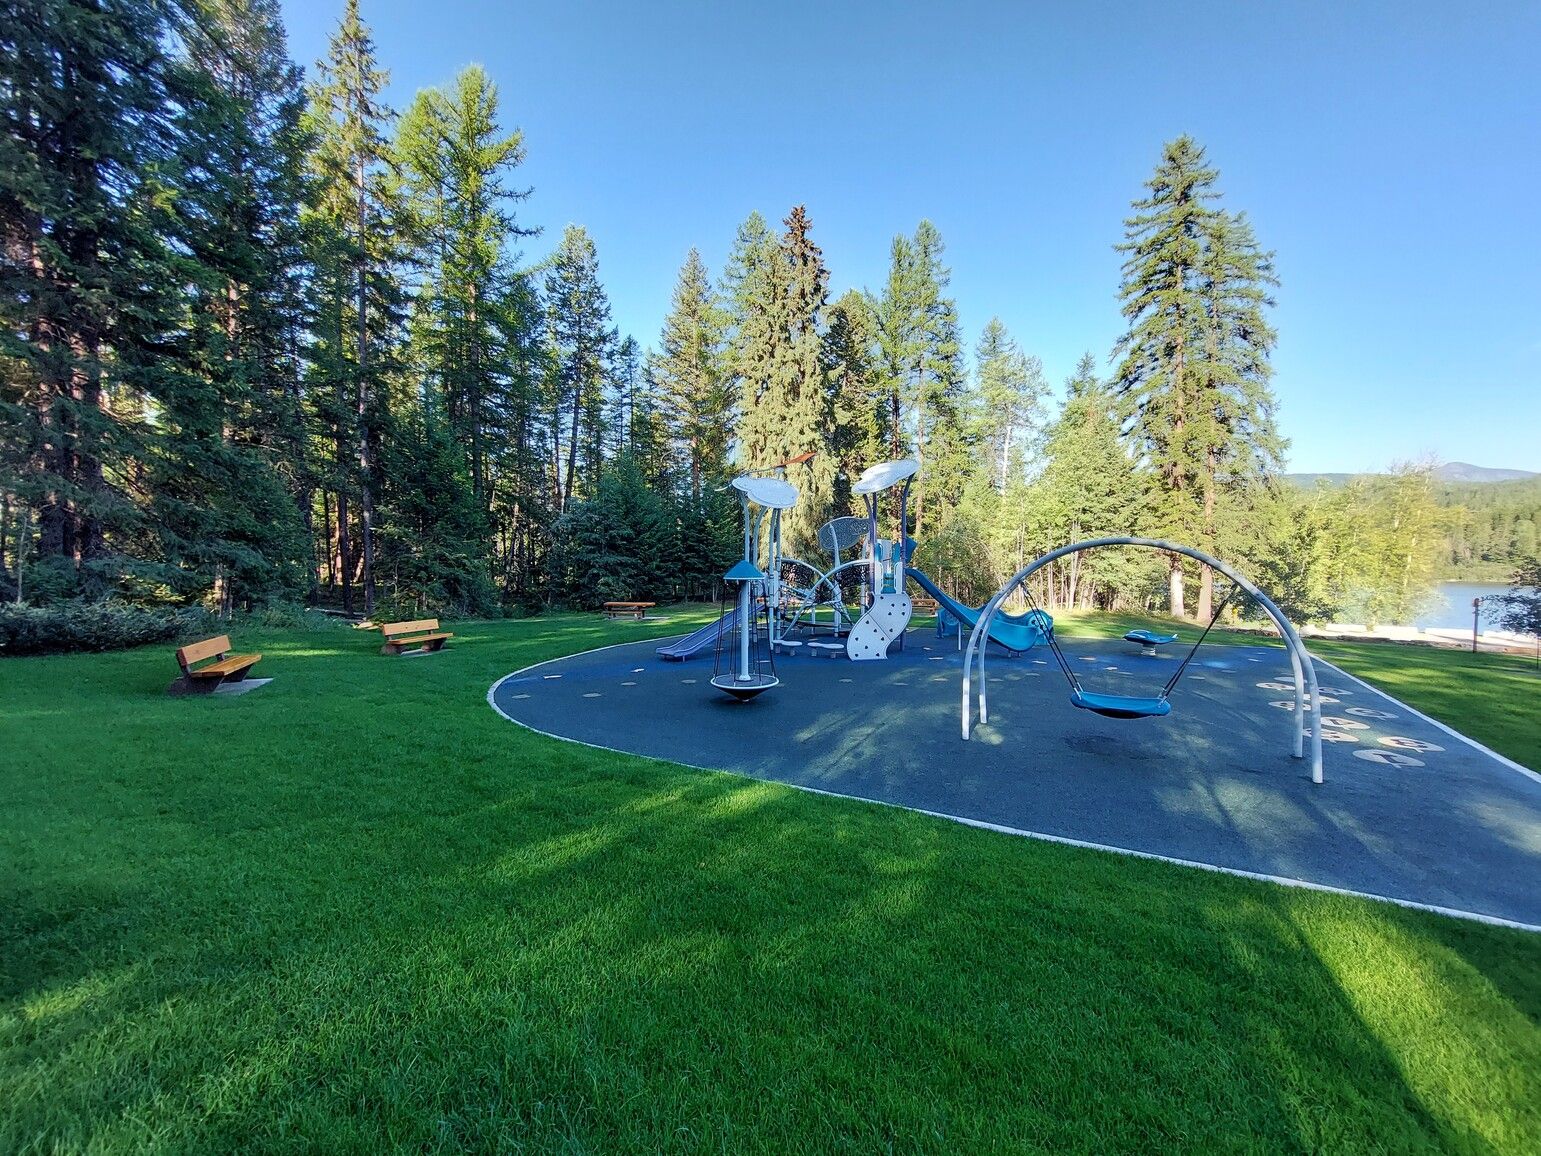 Day-use playground area at Jimsmith Lake Park.